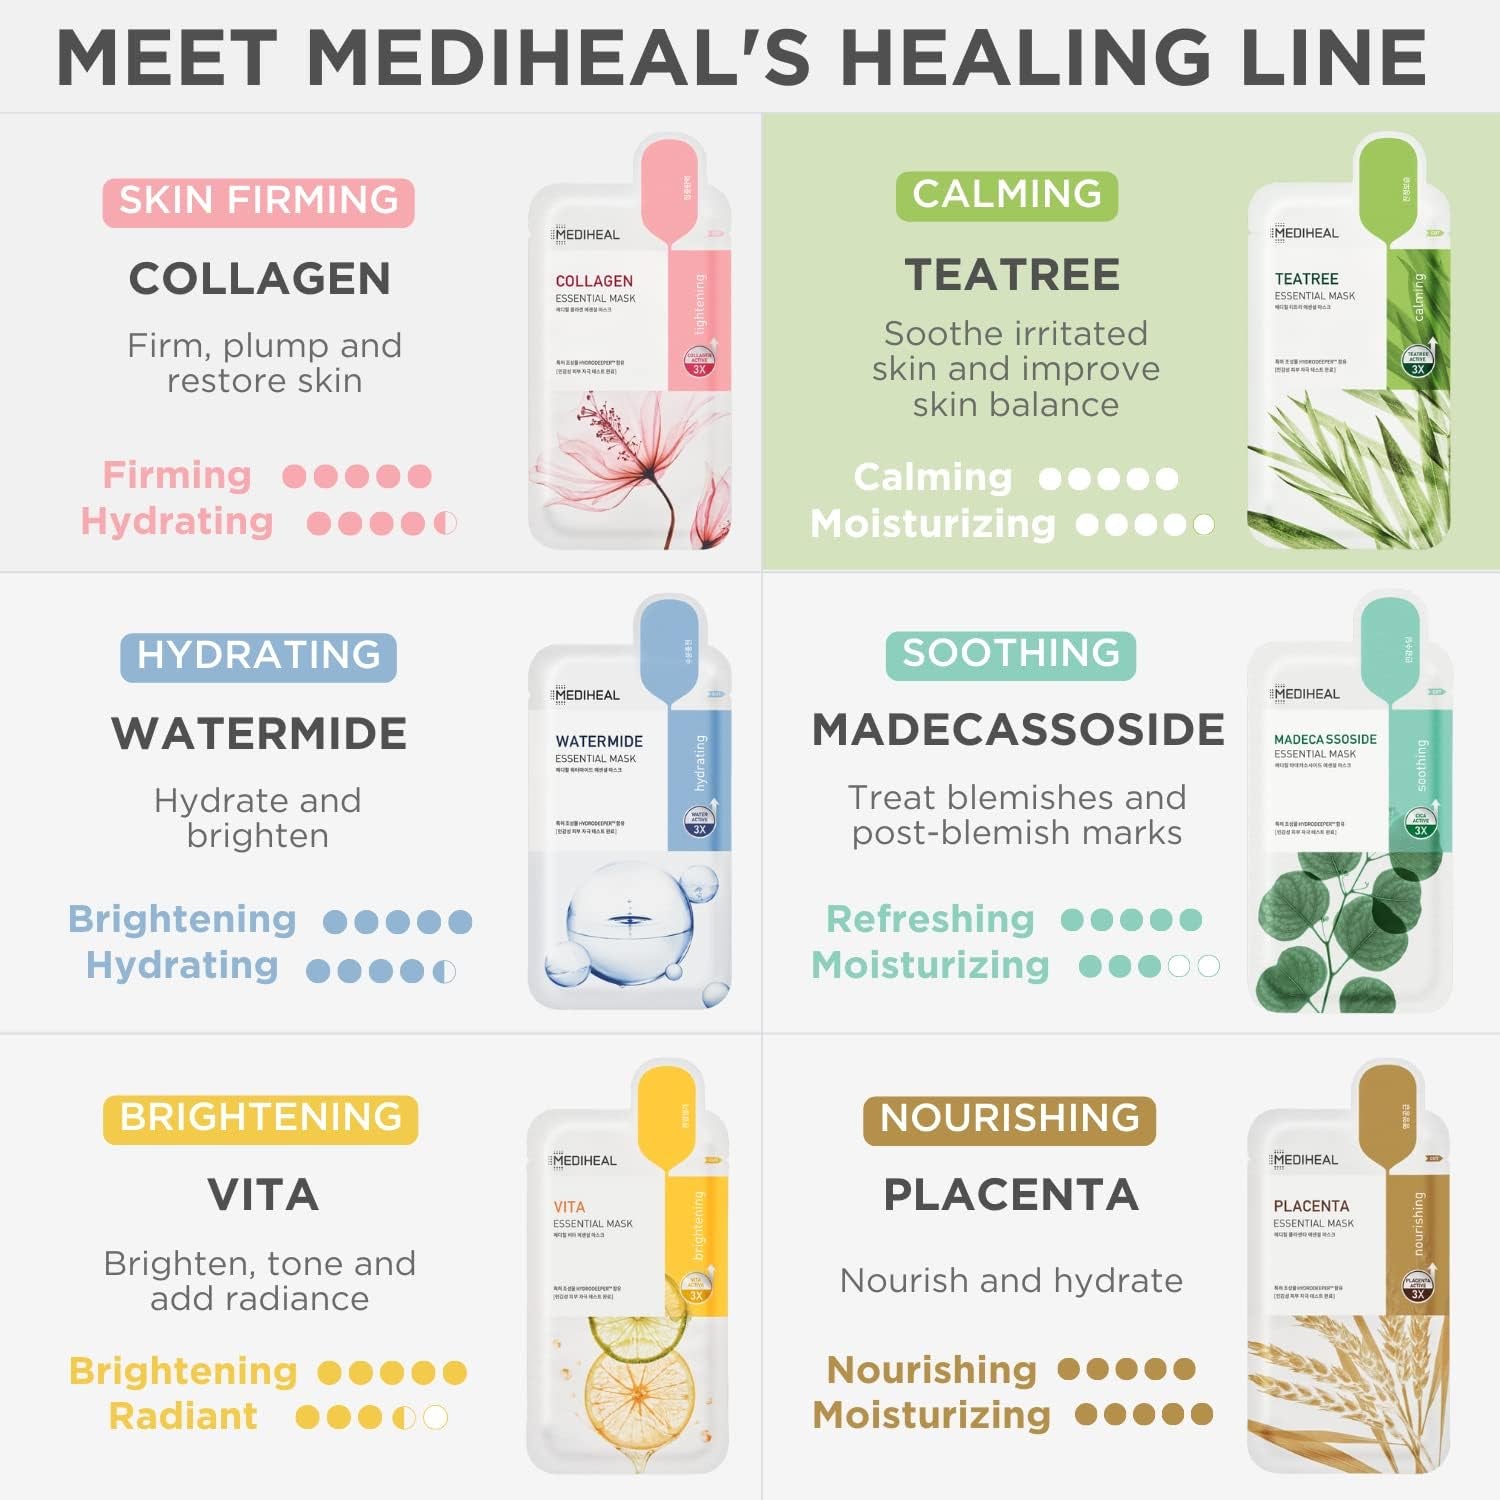 "Mediheal Tea Tree Essential Face Mask - Skin Soothing Blemish Treatment Set (30 Sheets)"